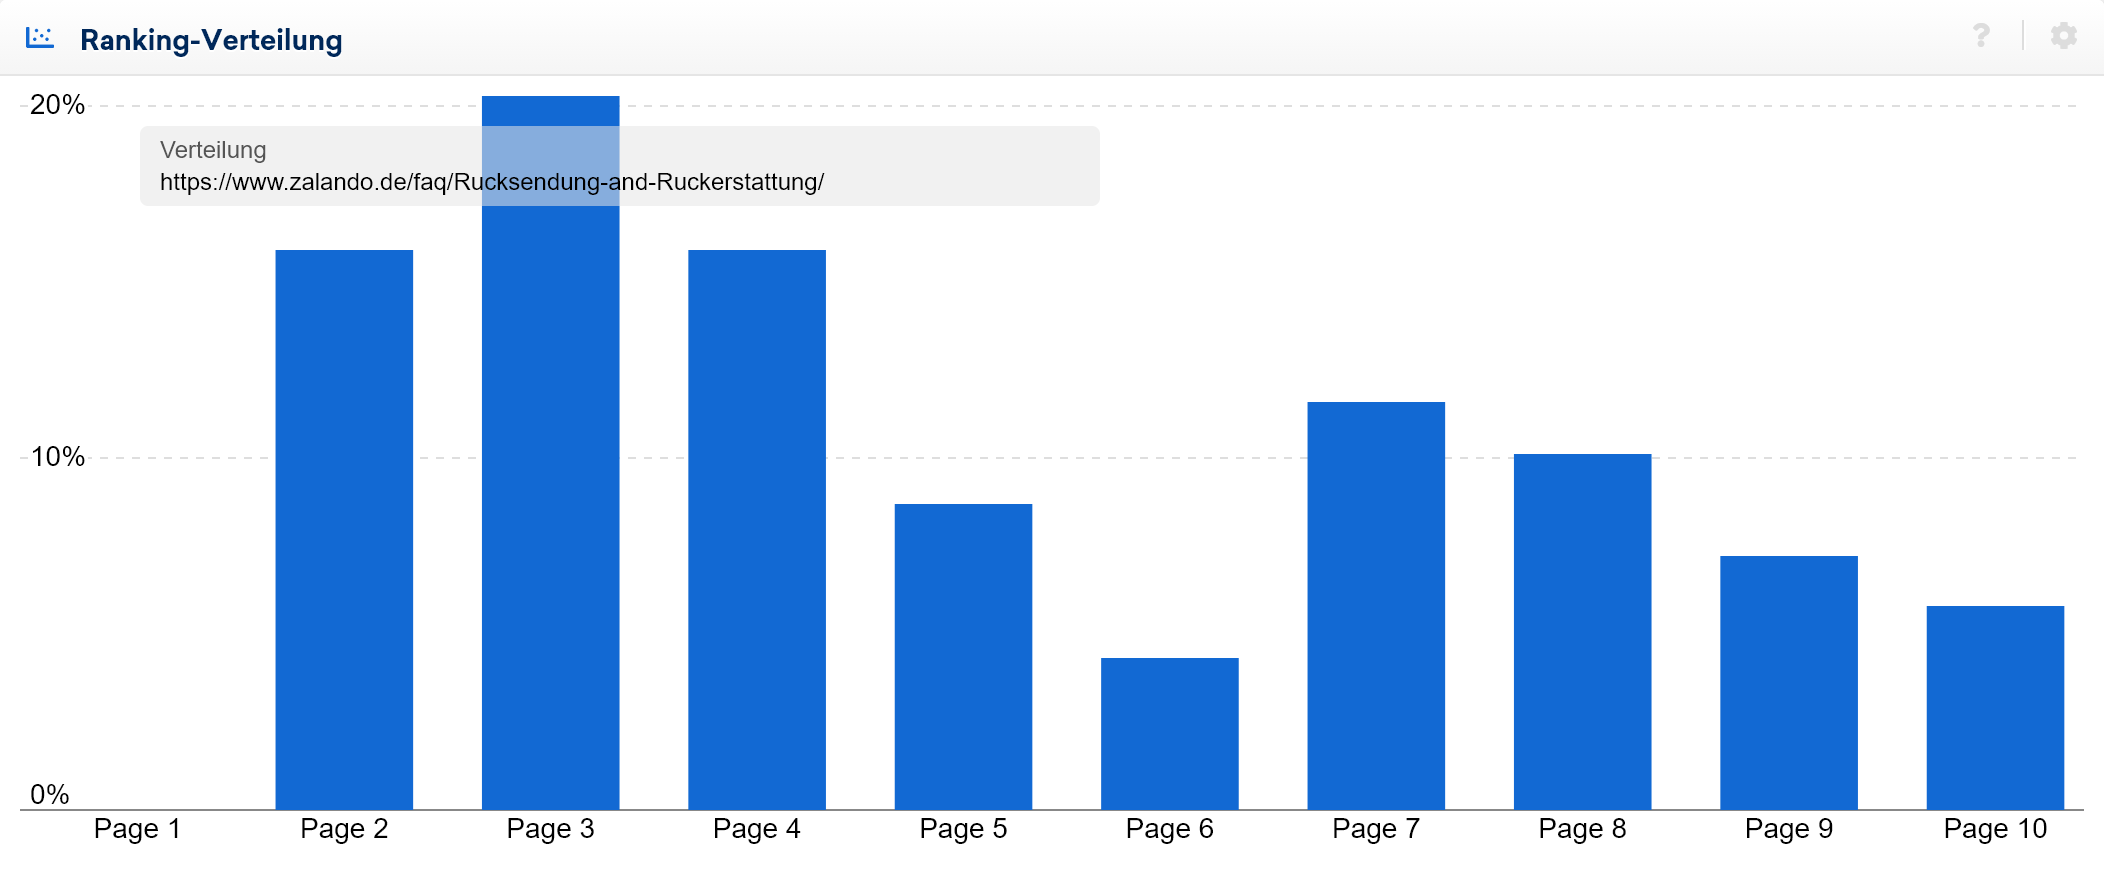 Vergleich Ranking-Verteilung Content-Formate zalando.de